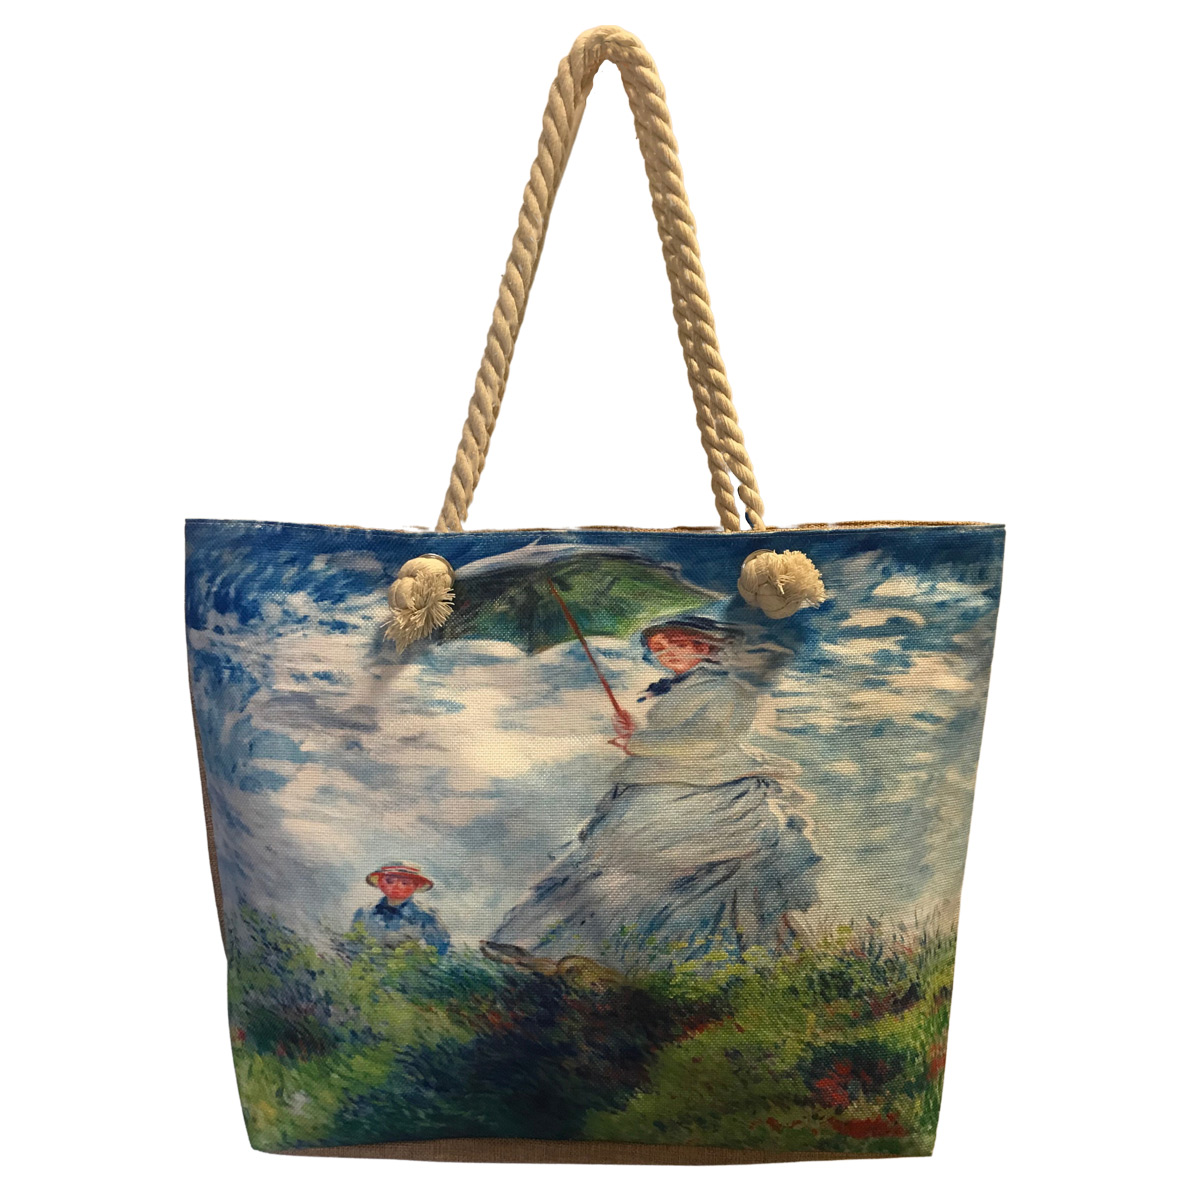 331 - Woman with a Parasol (Claude Monet)